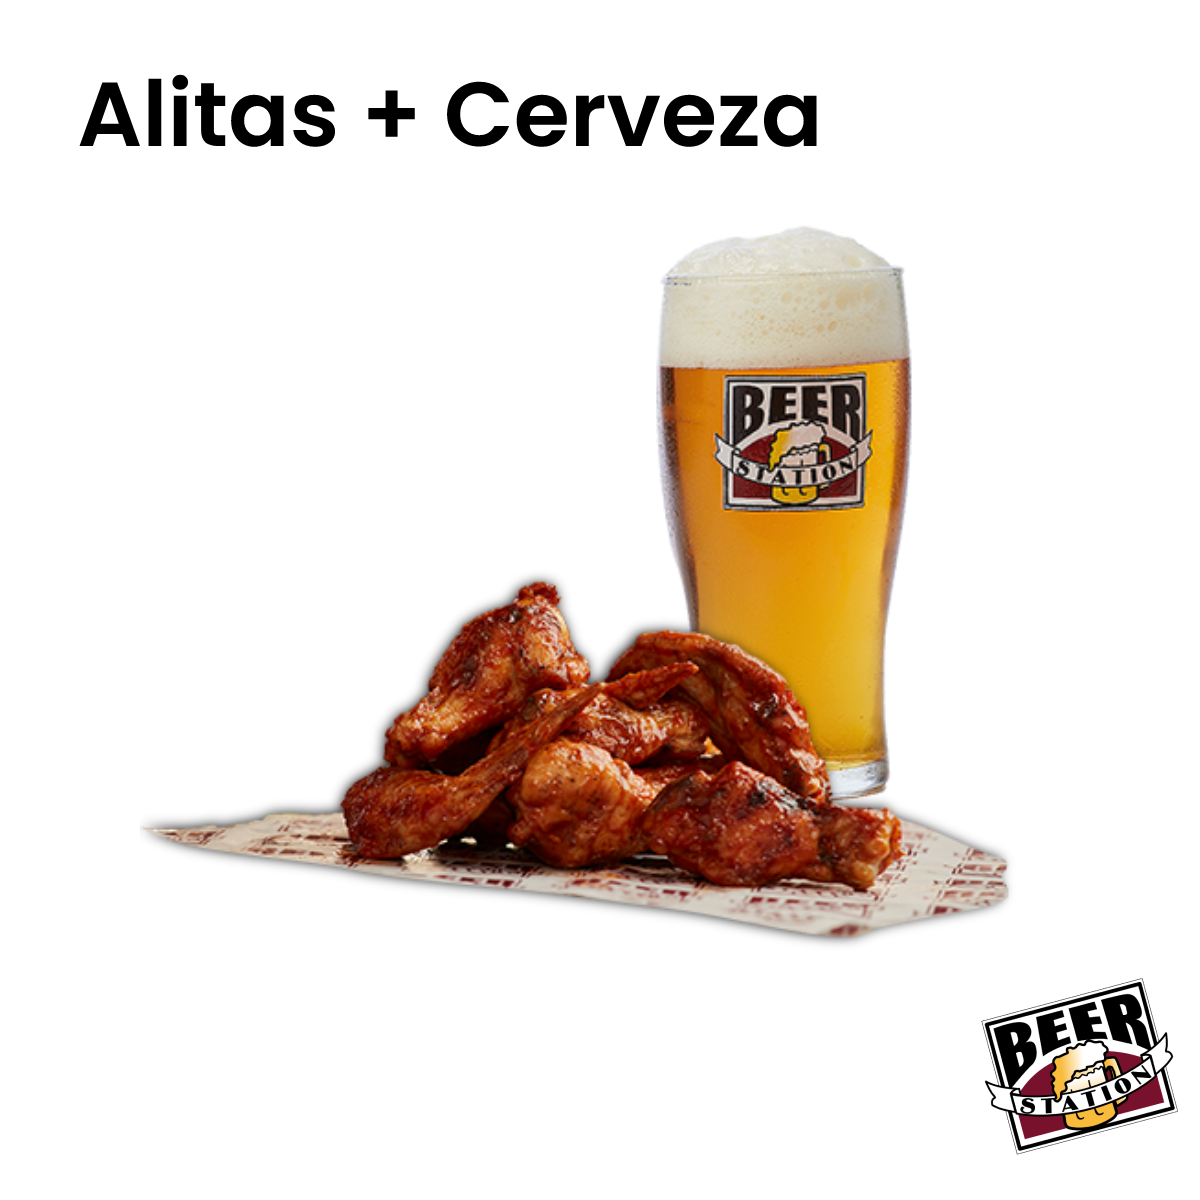 Bono Combo Alitas + Cerveza - Beer Station